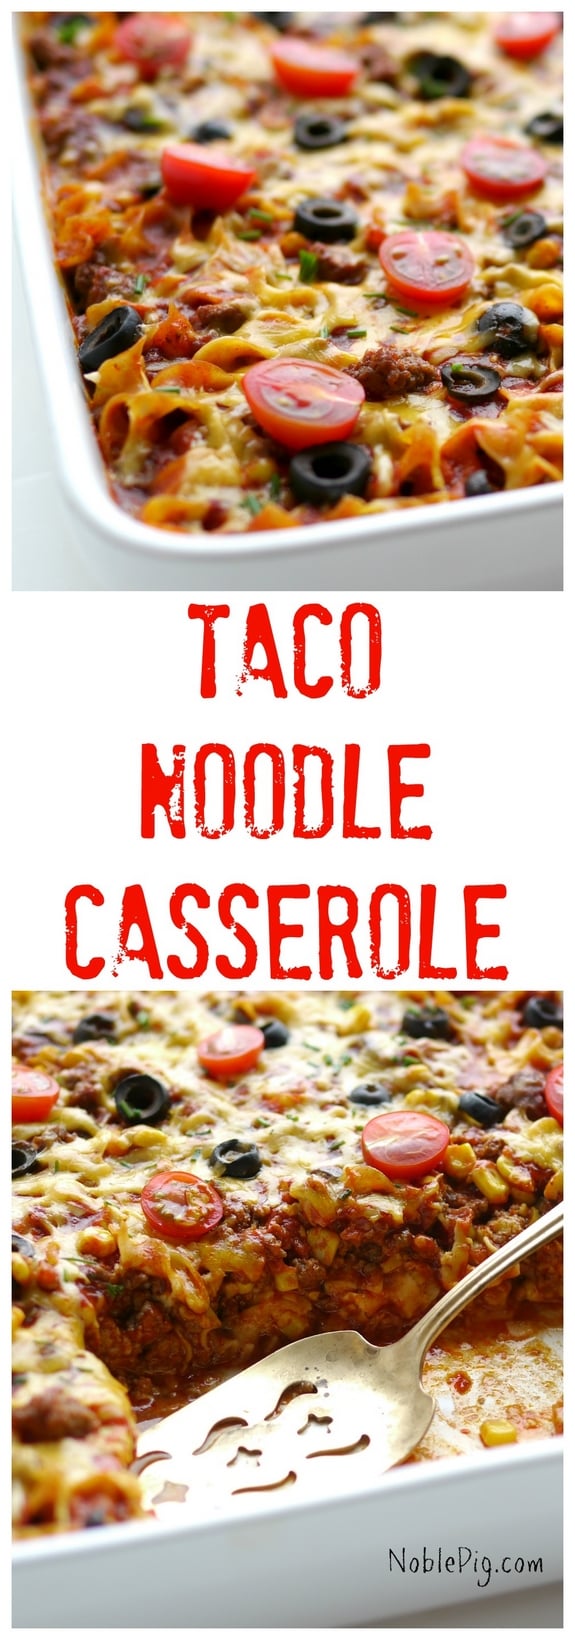 Taco Noodle Casserole